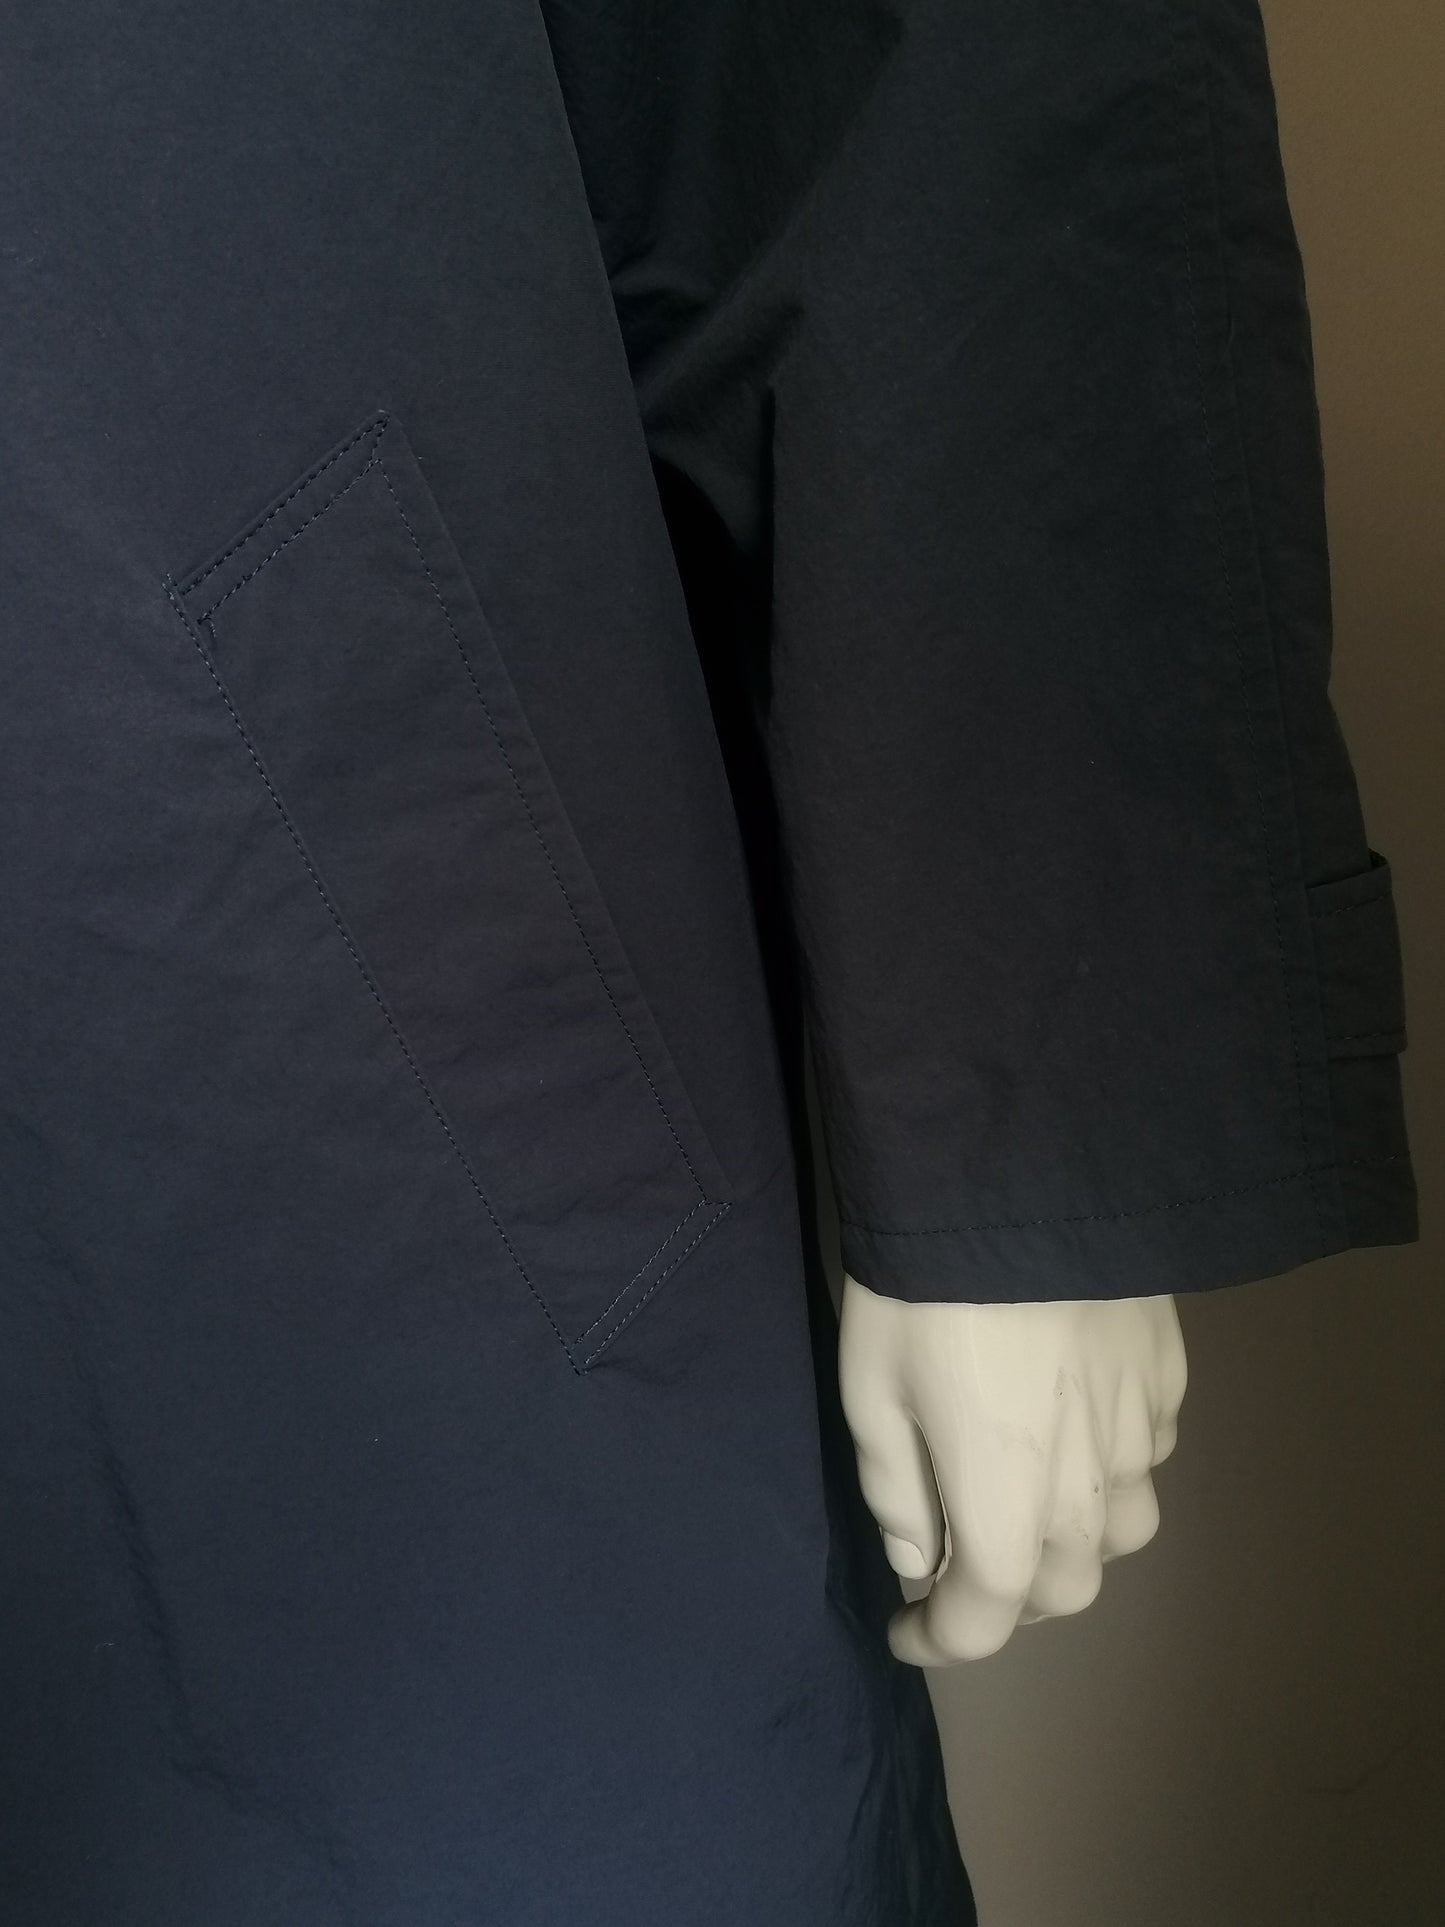 Manderley Mantel / Halb -Länge -Jacke. Dunkelblau gefärbt. Größe 98 / xl. (58/60)